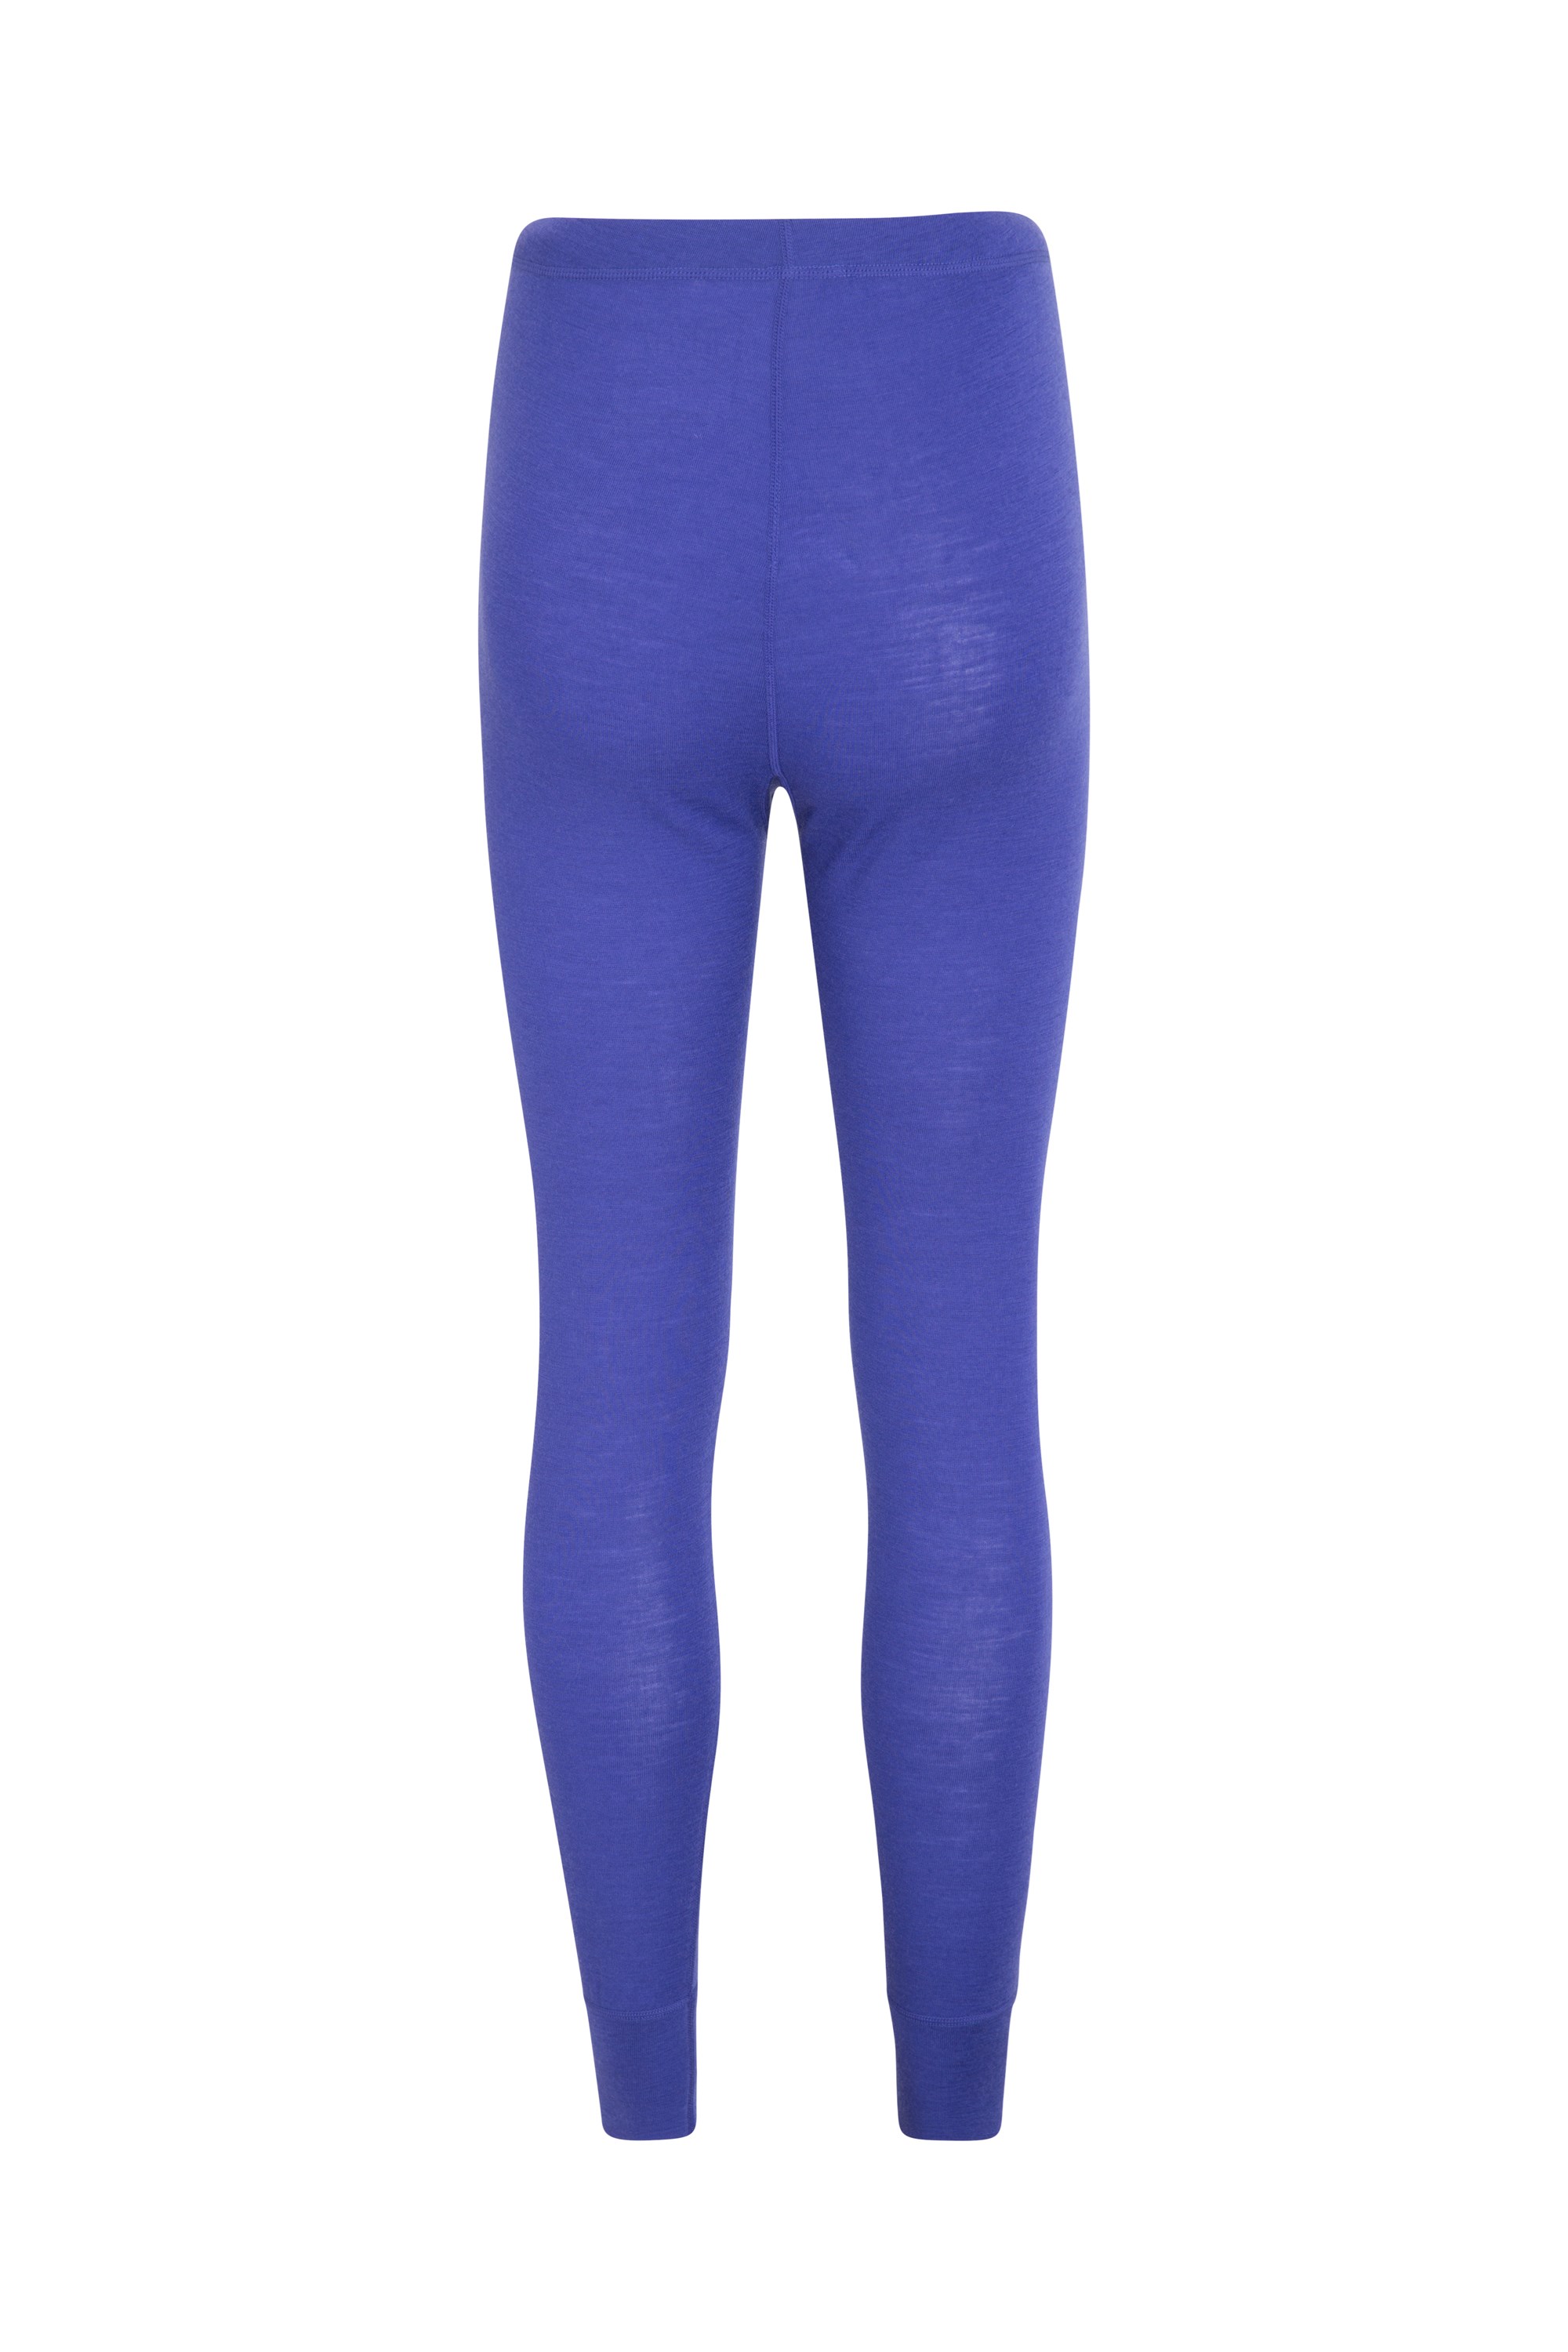 Mountain Warehouse Merino Womens Pants with Elastic Waistband & Breathable 